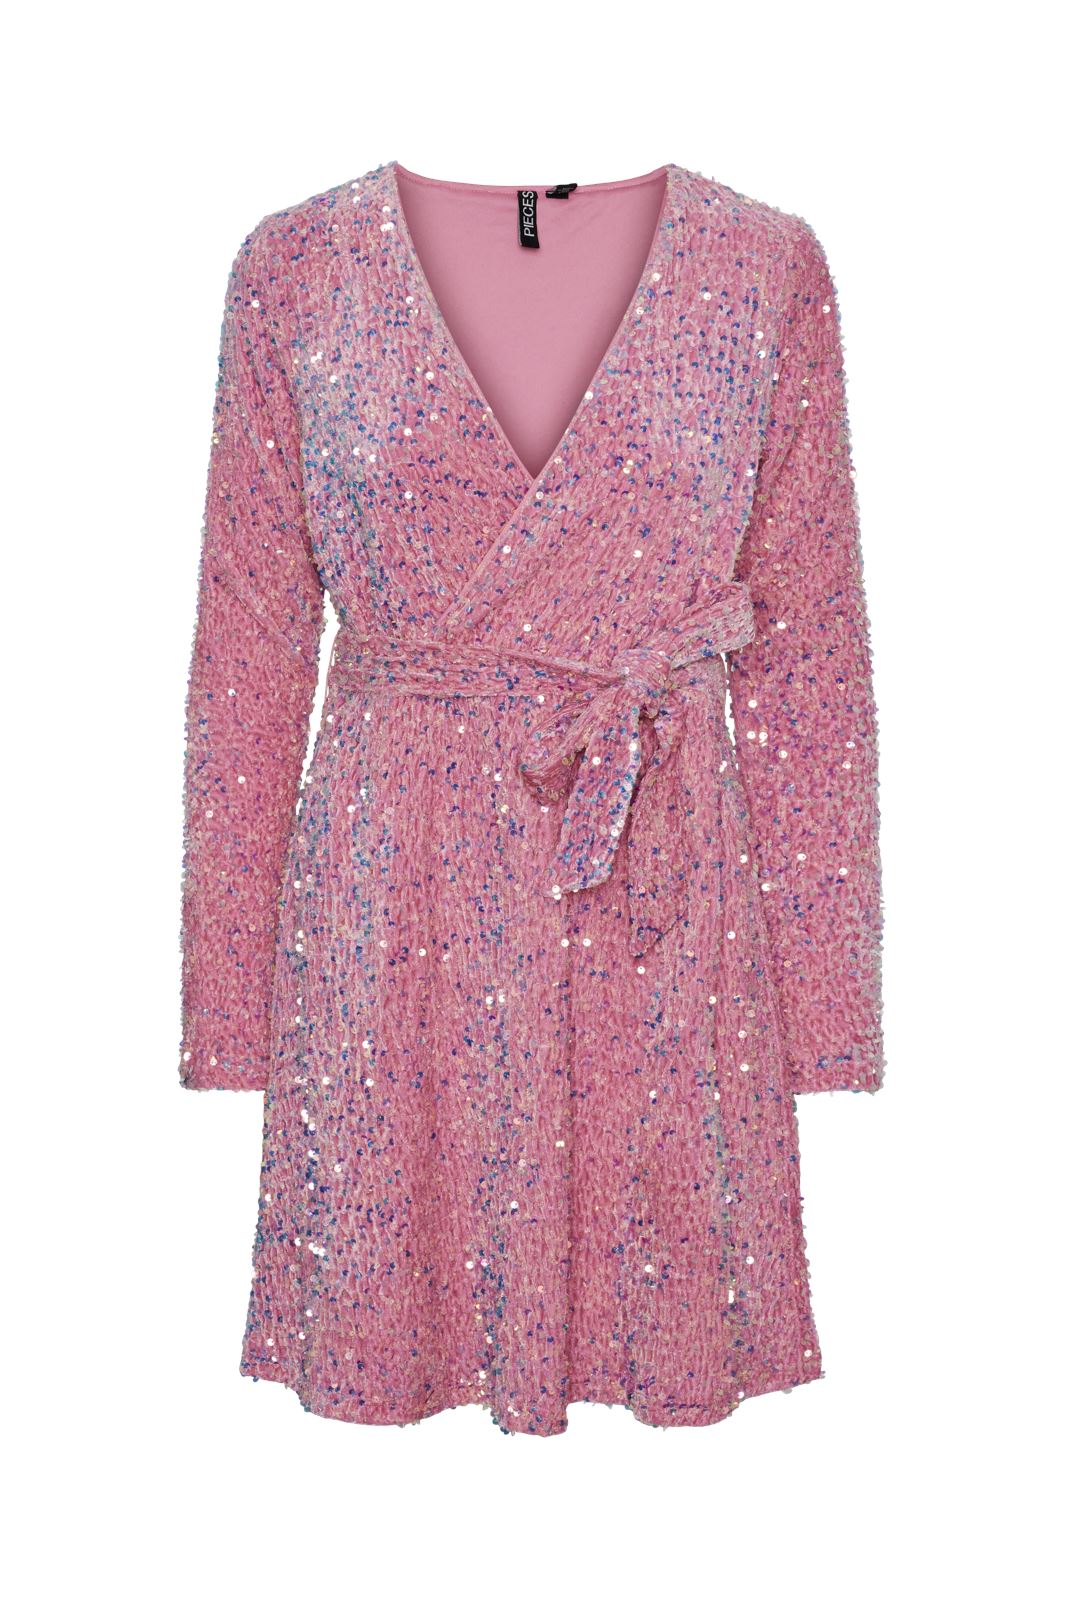 Pieces - Pcella Ls Sequin Wrap Dress - 4554784 Hot Pink Sequens